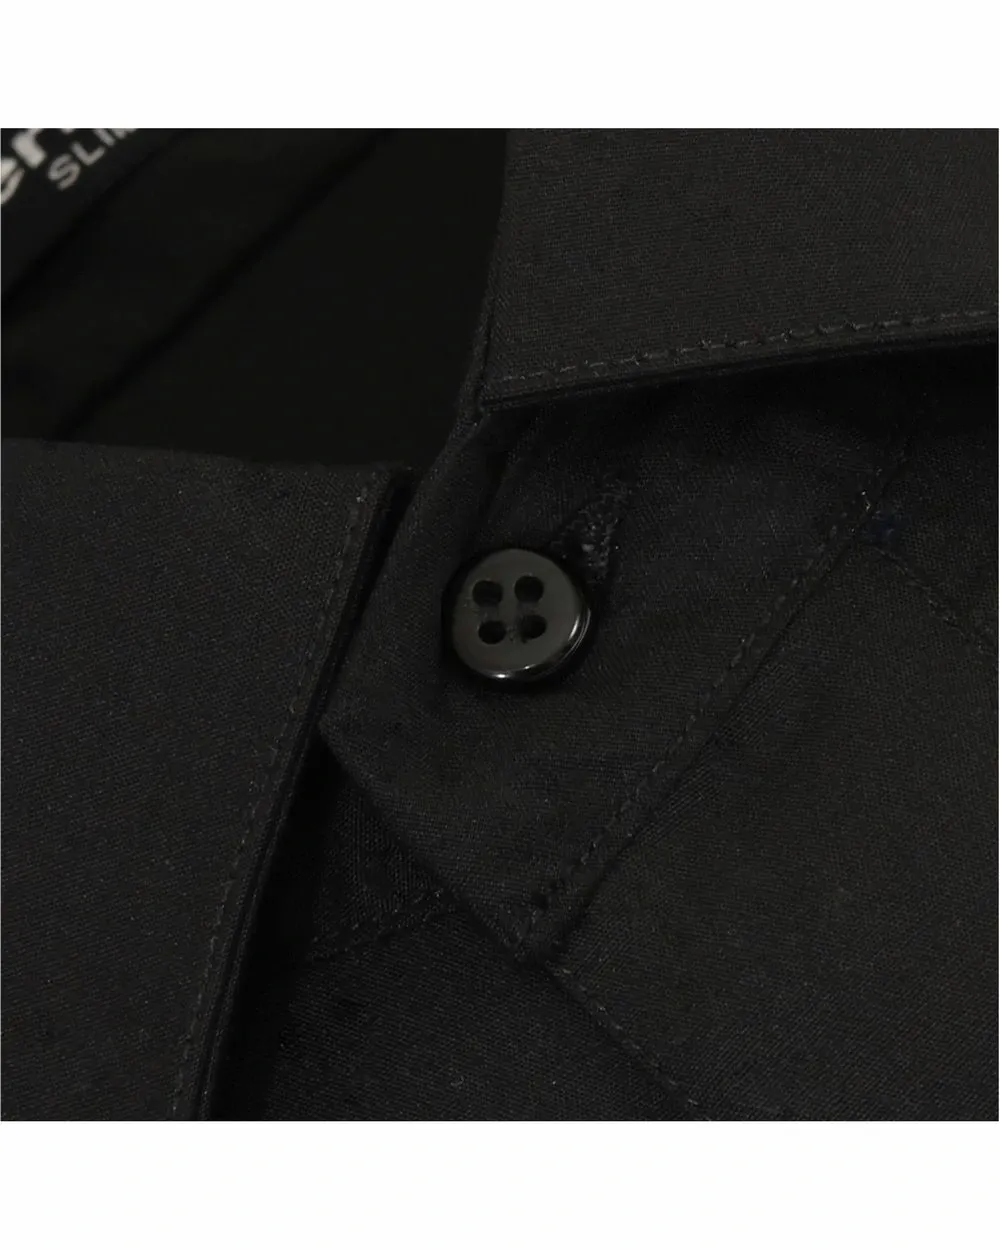 Camisa de vestir stretch negra manga larga slim fit